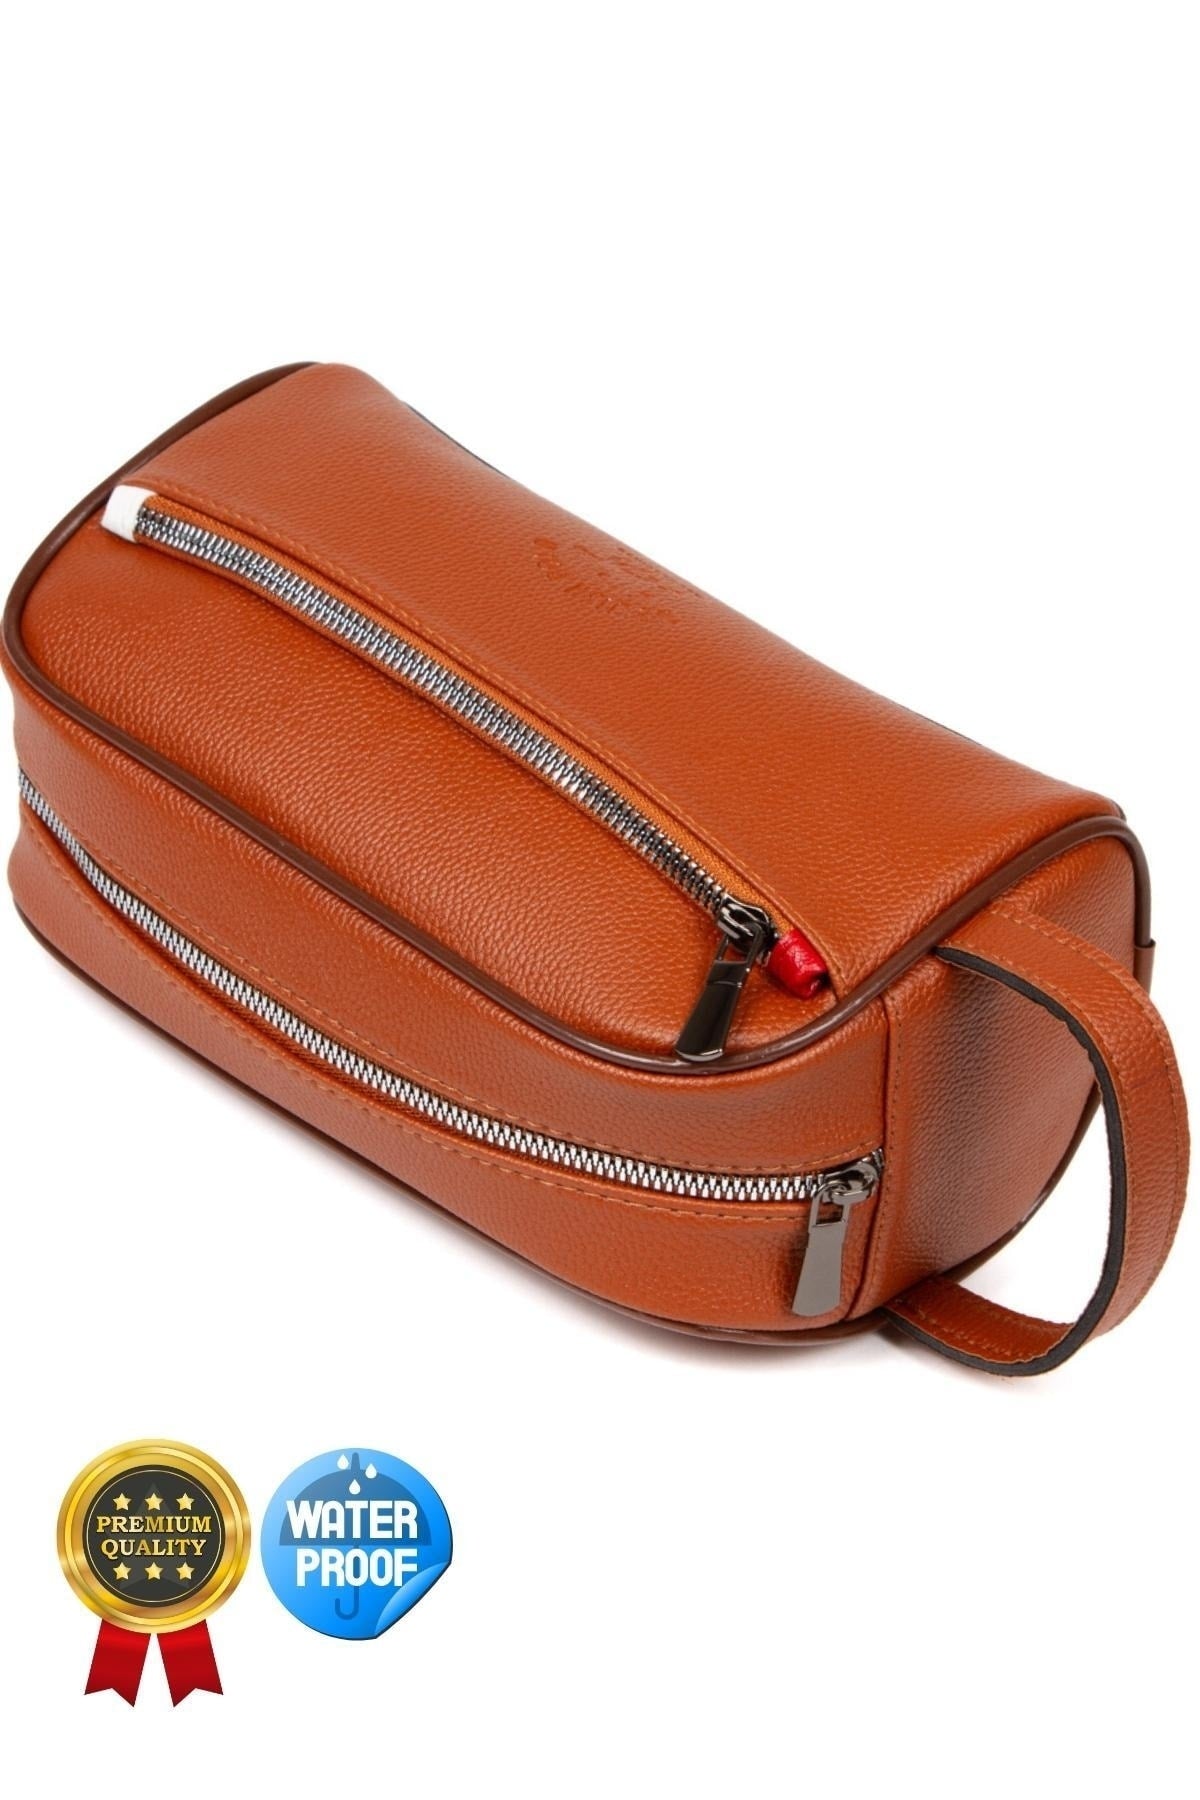 Adelina Men's Leather Portfolio Clutch Bag Travel Shaving Cosmetic Clutch Bag Brown